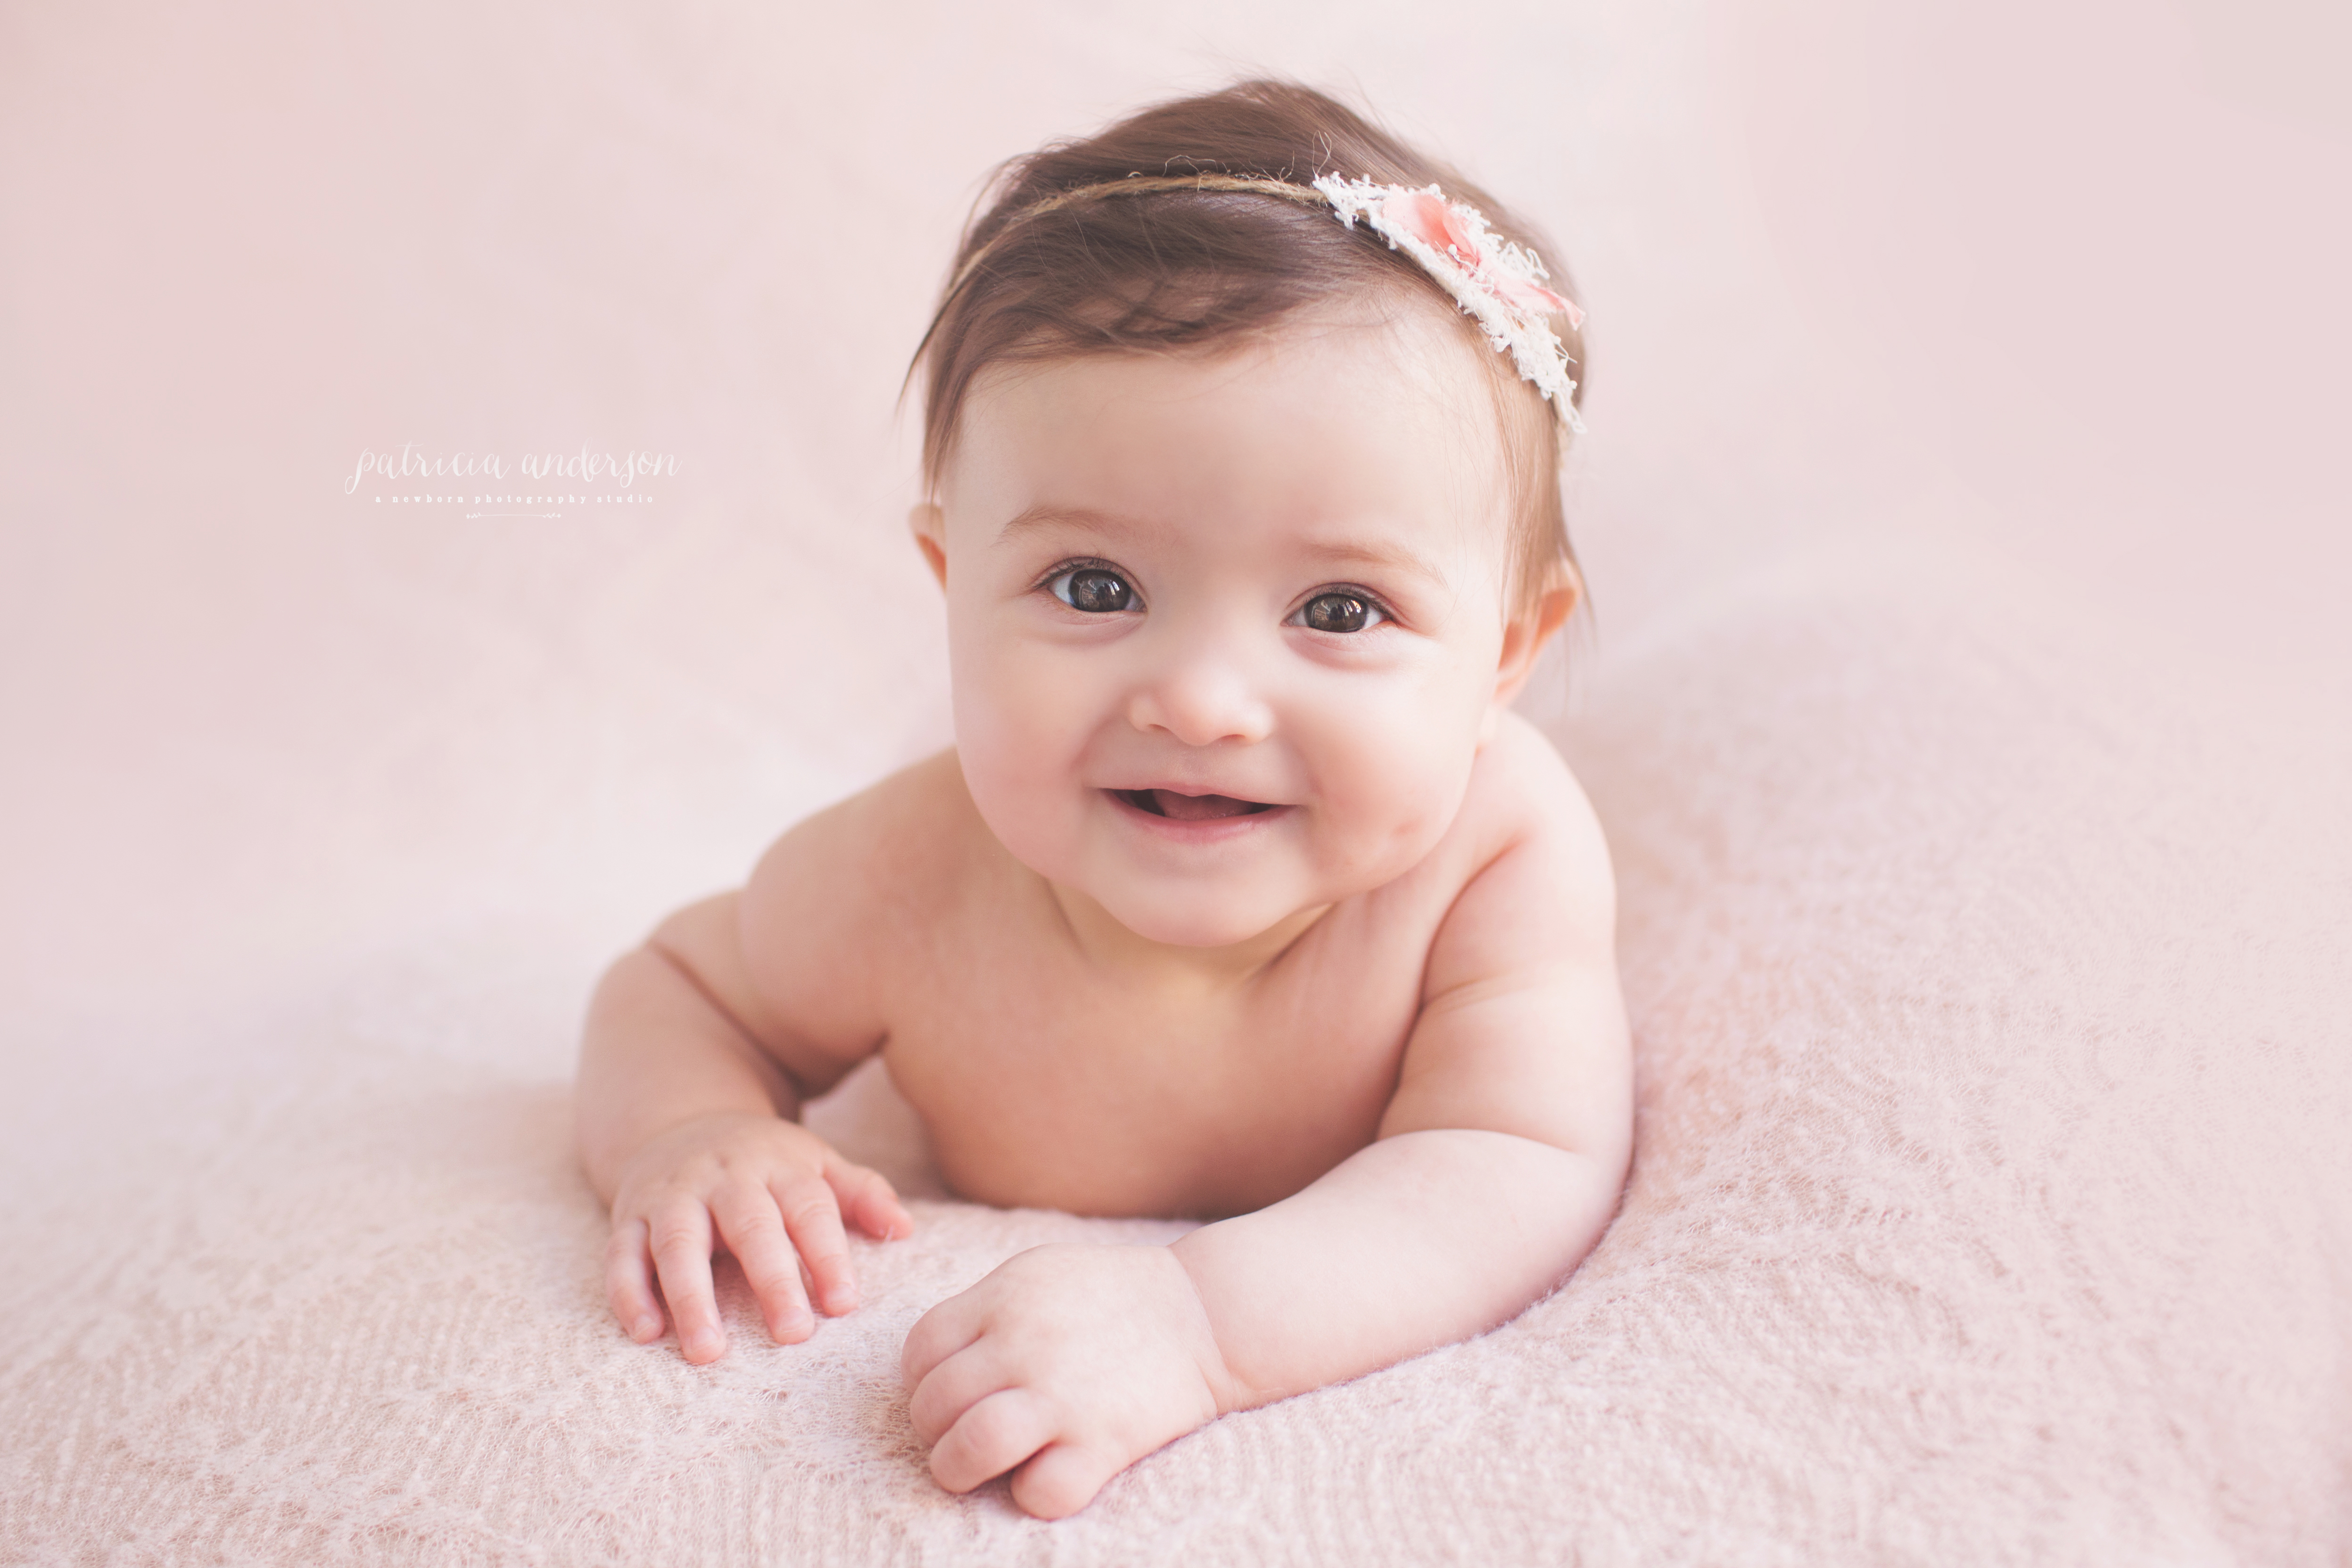 Chicago Newborn Photographer | Patricia Anderson Photography